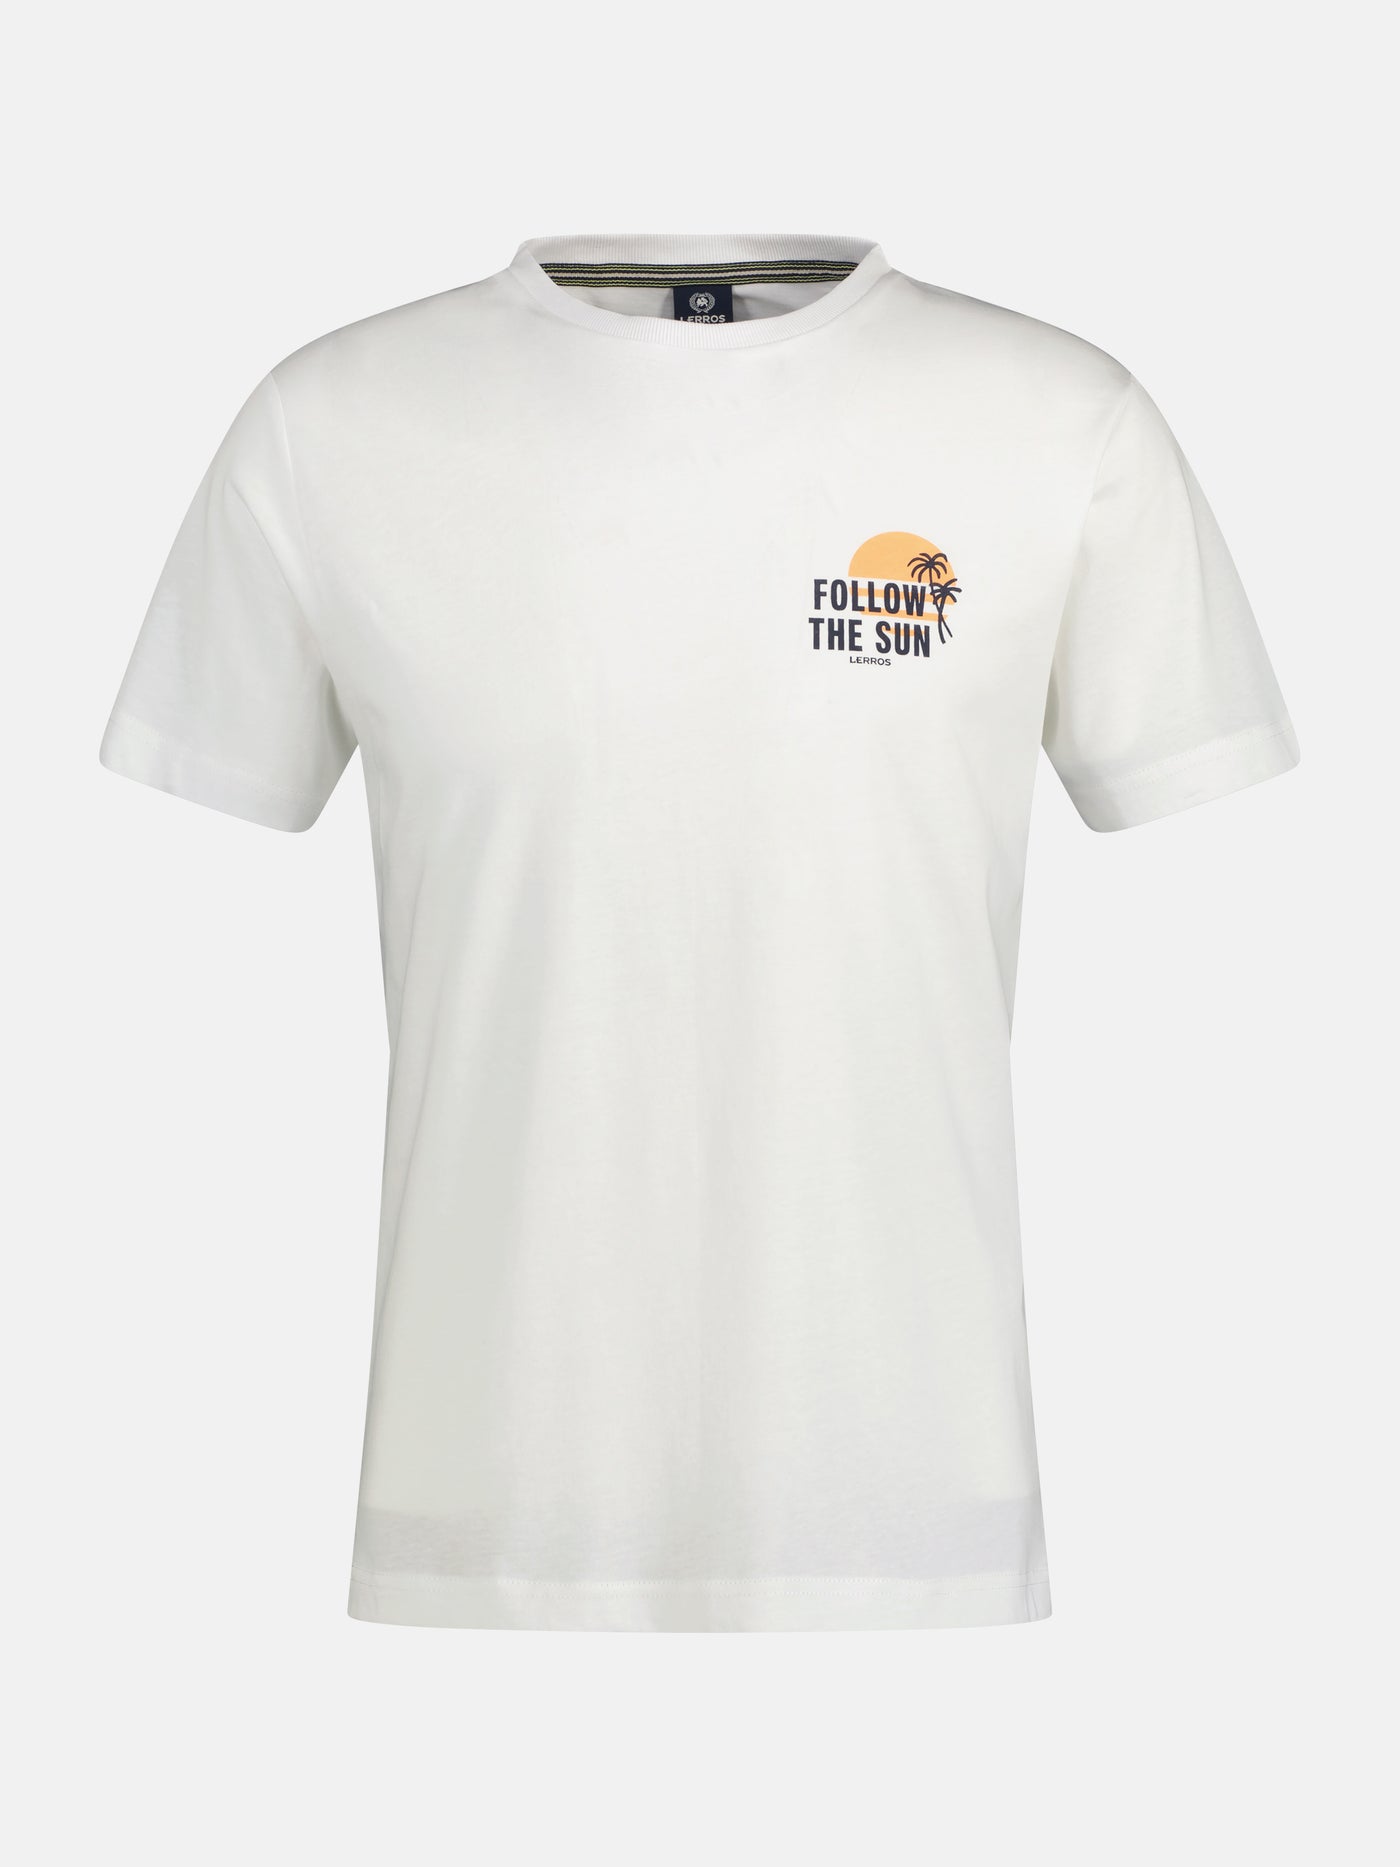 T-shirt met print op de borst *Follow the sun*